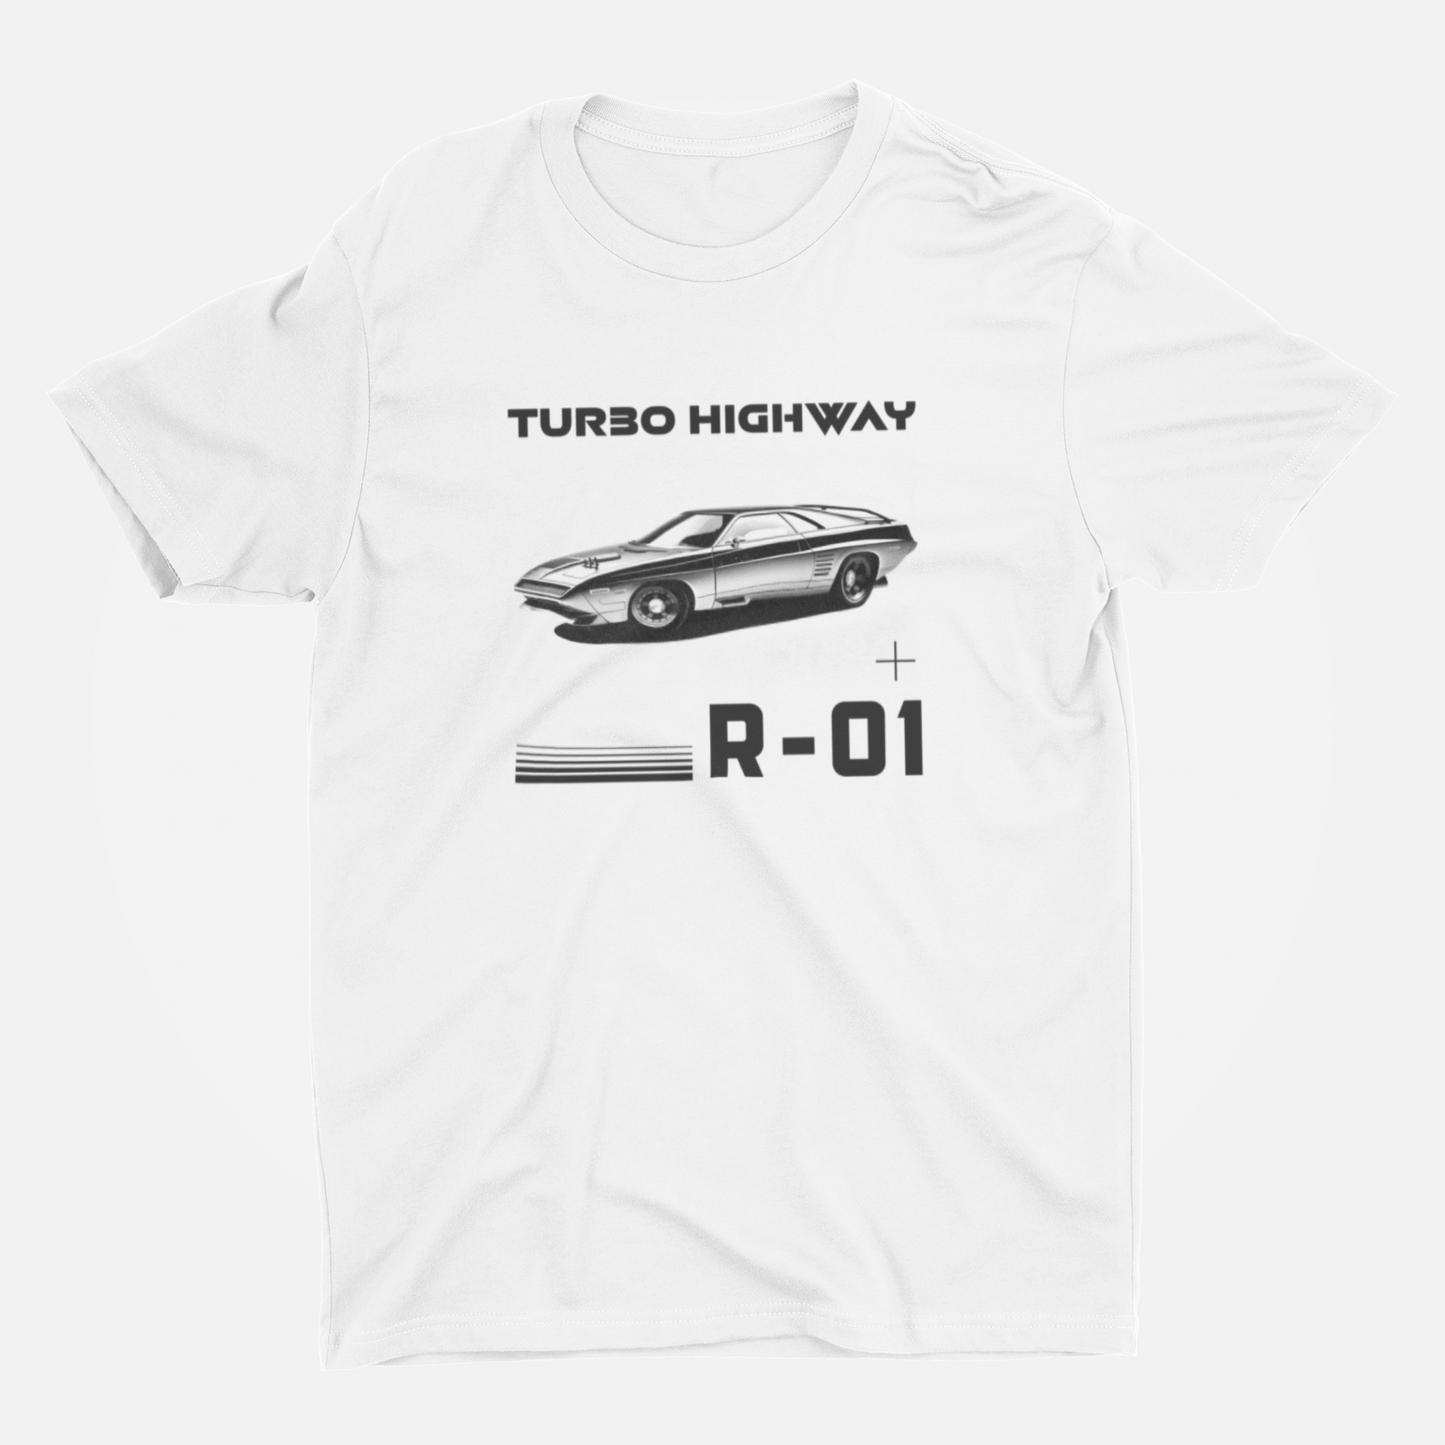 Turbo Highway Vintage Car White Round Neck T-Shirt for Men. 